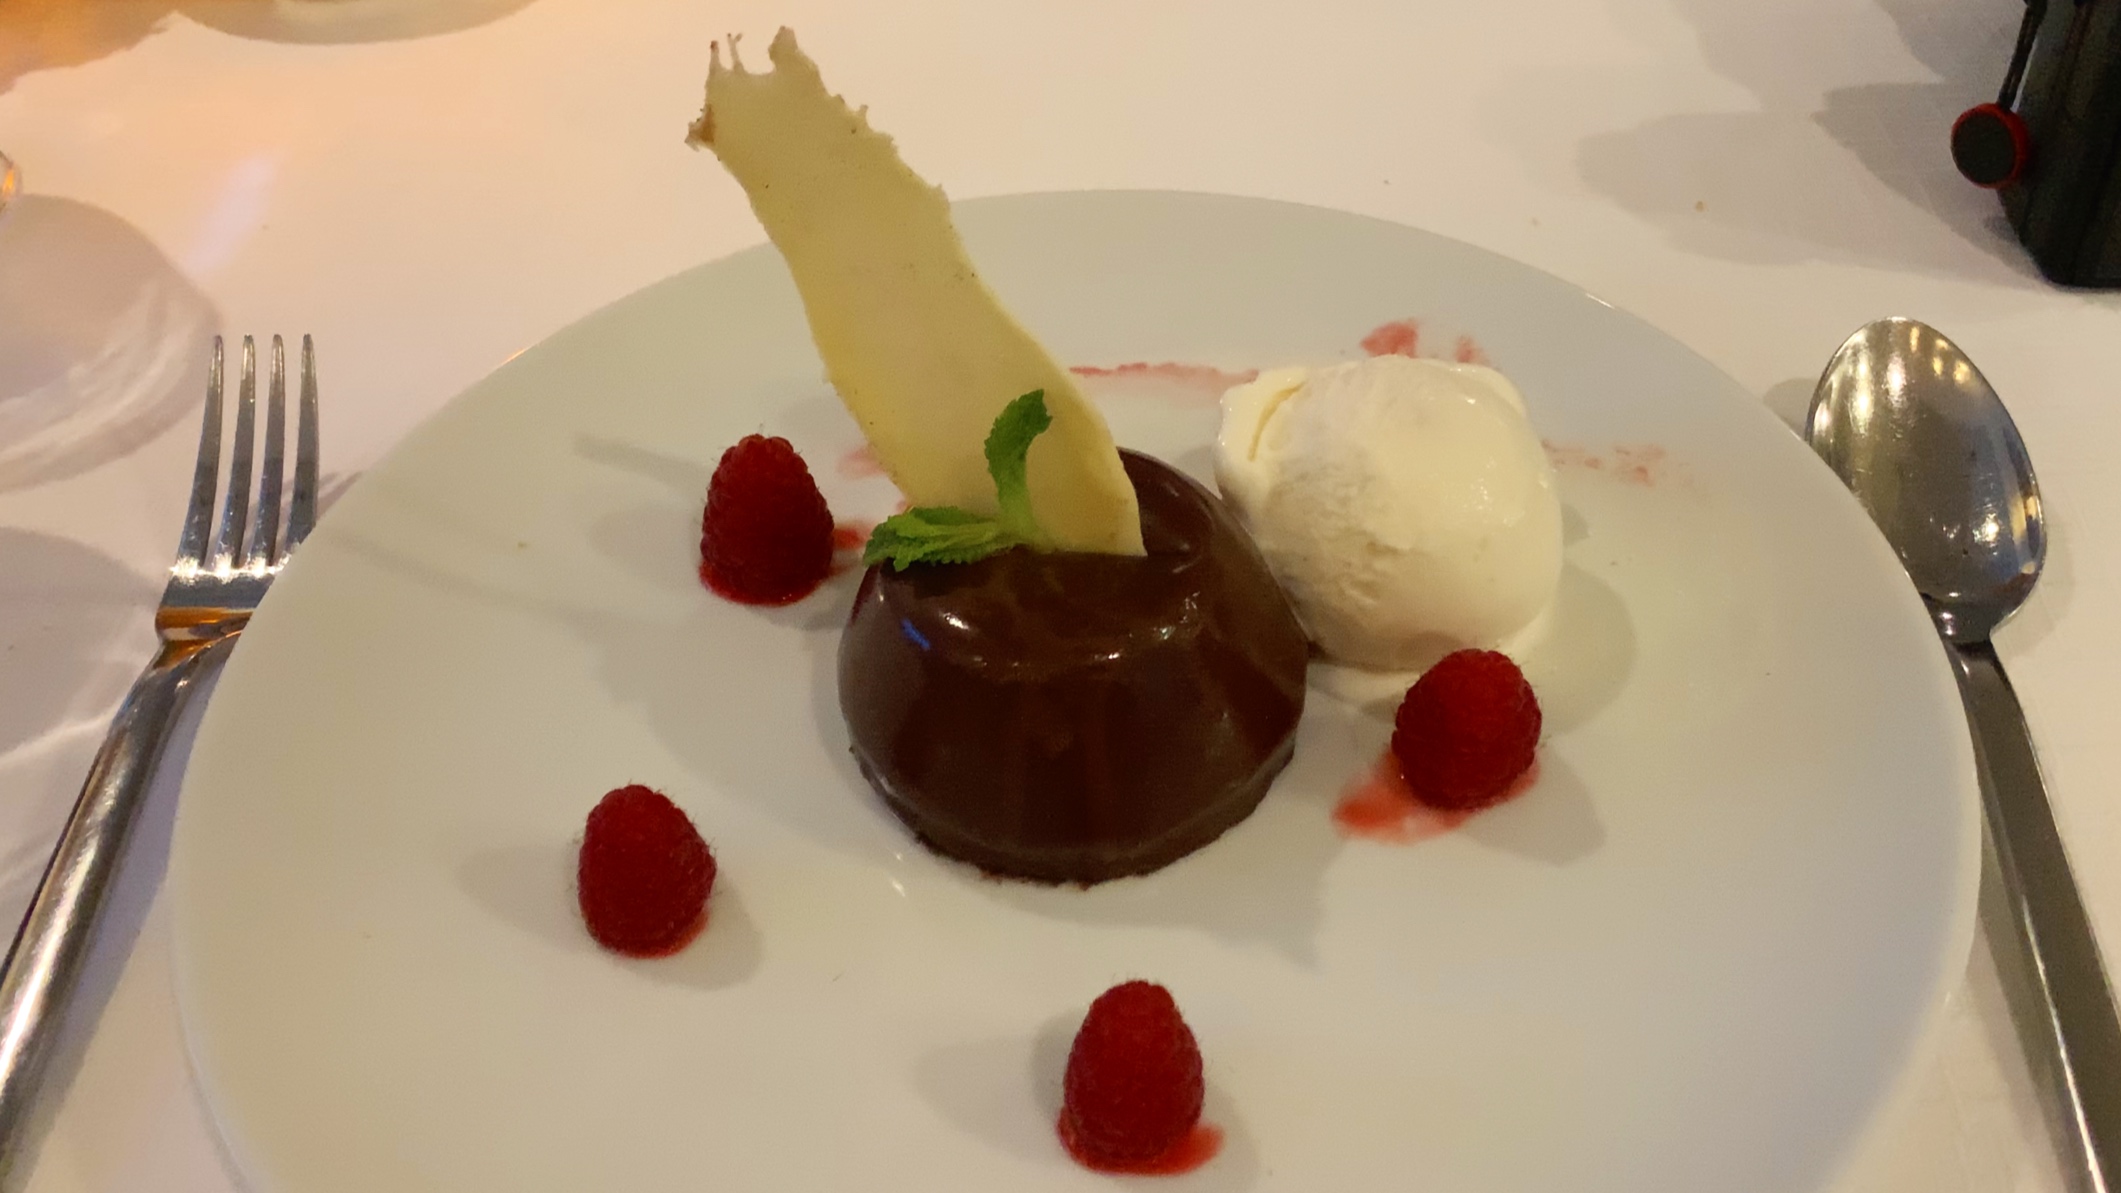  Chocolate dessert 